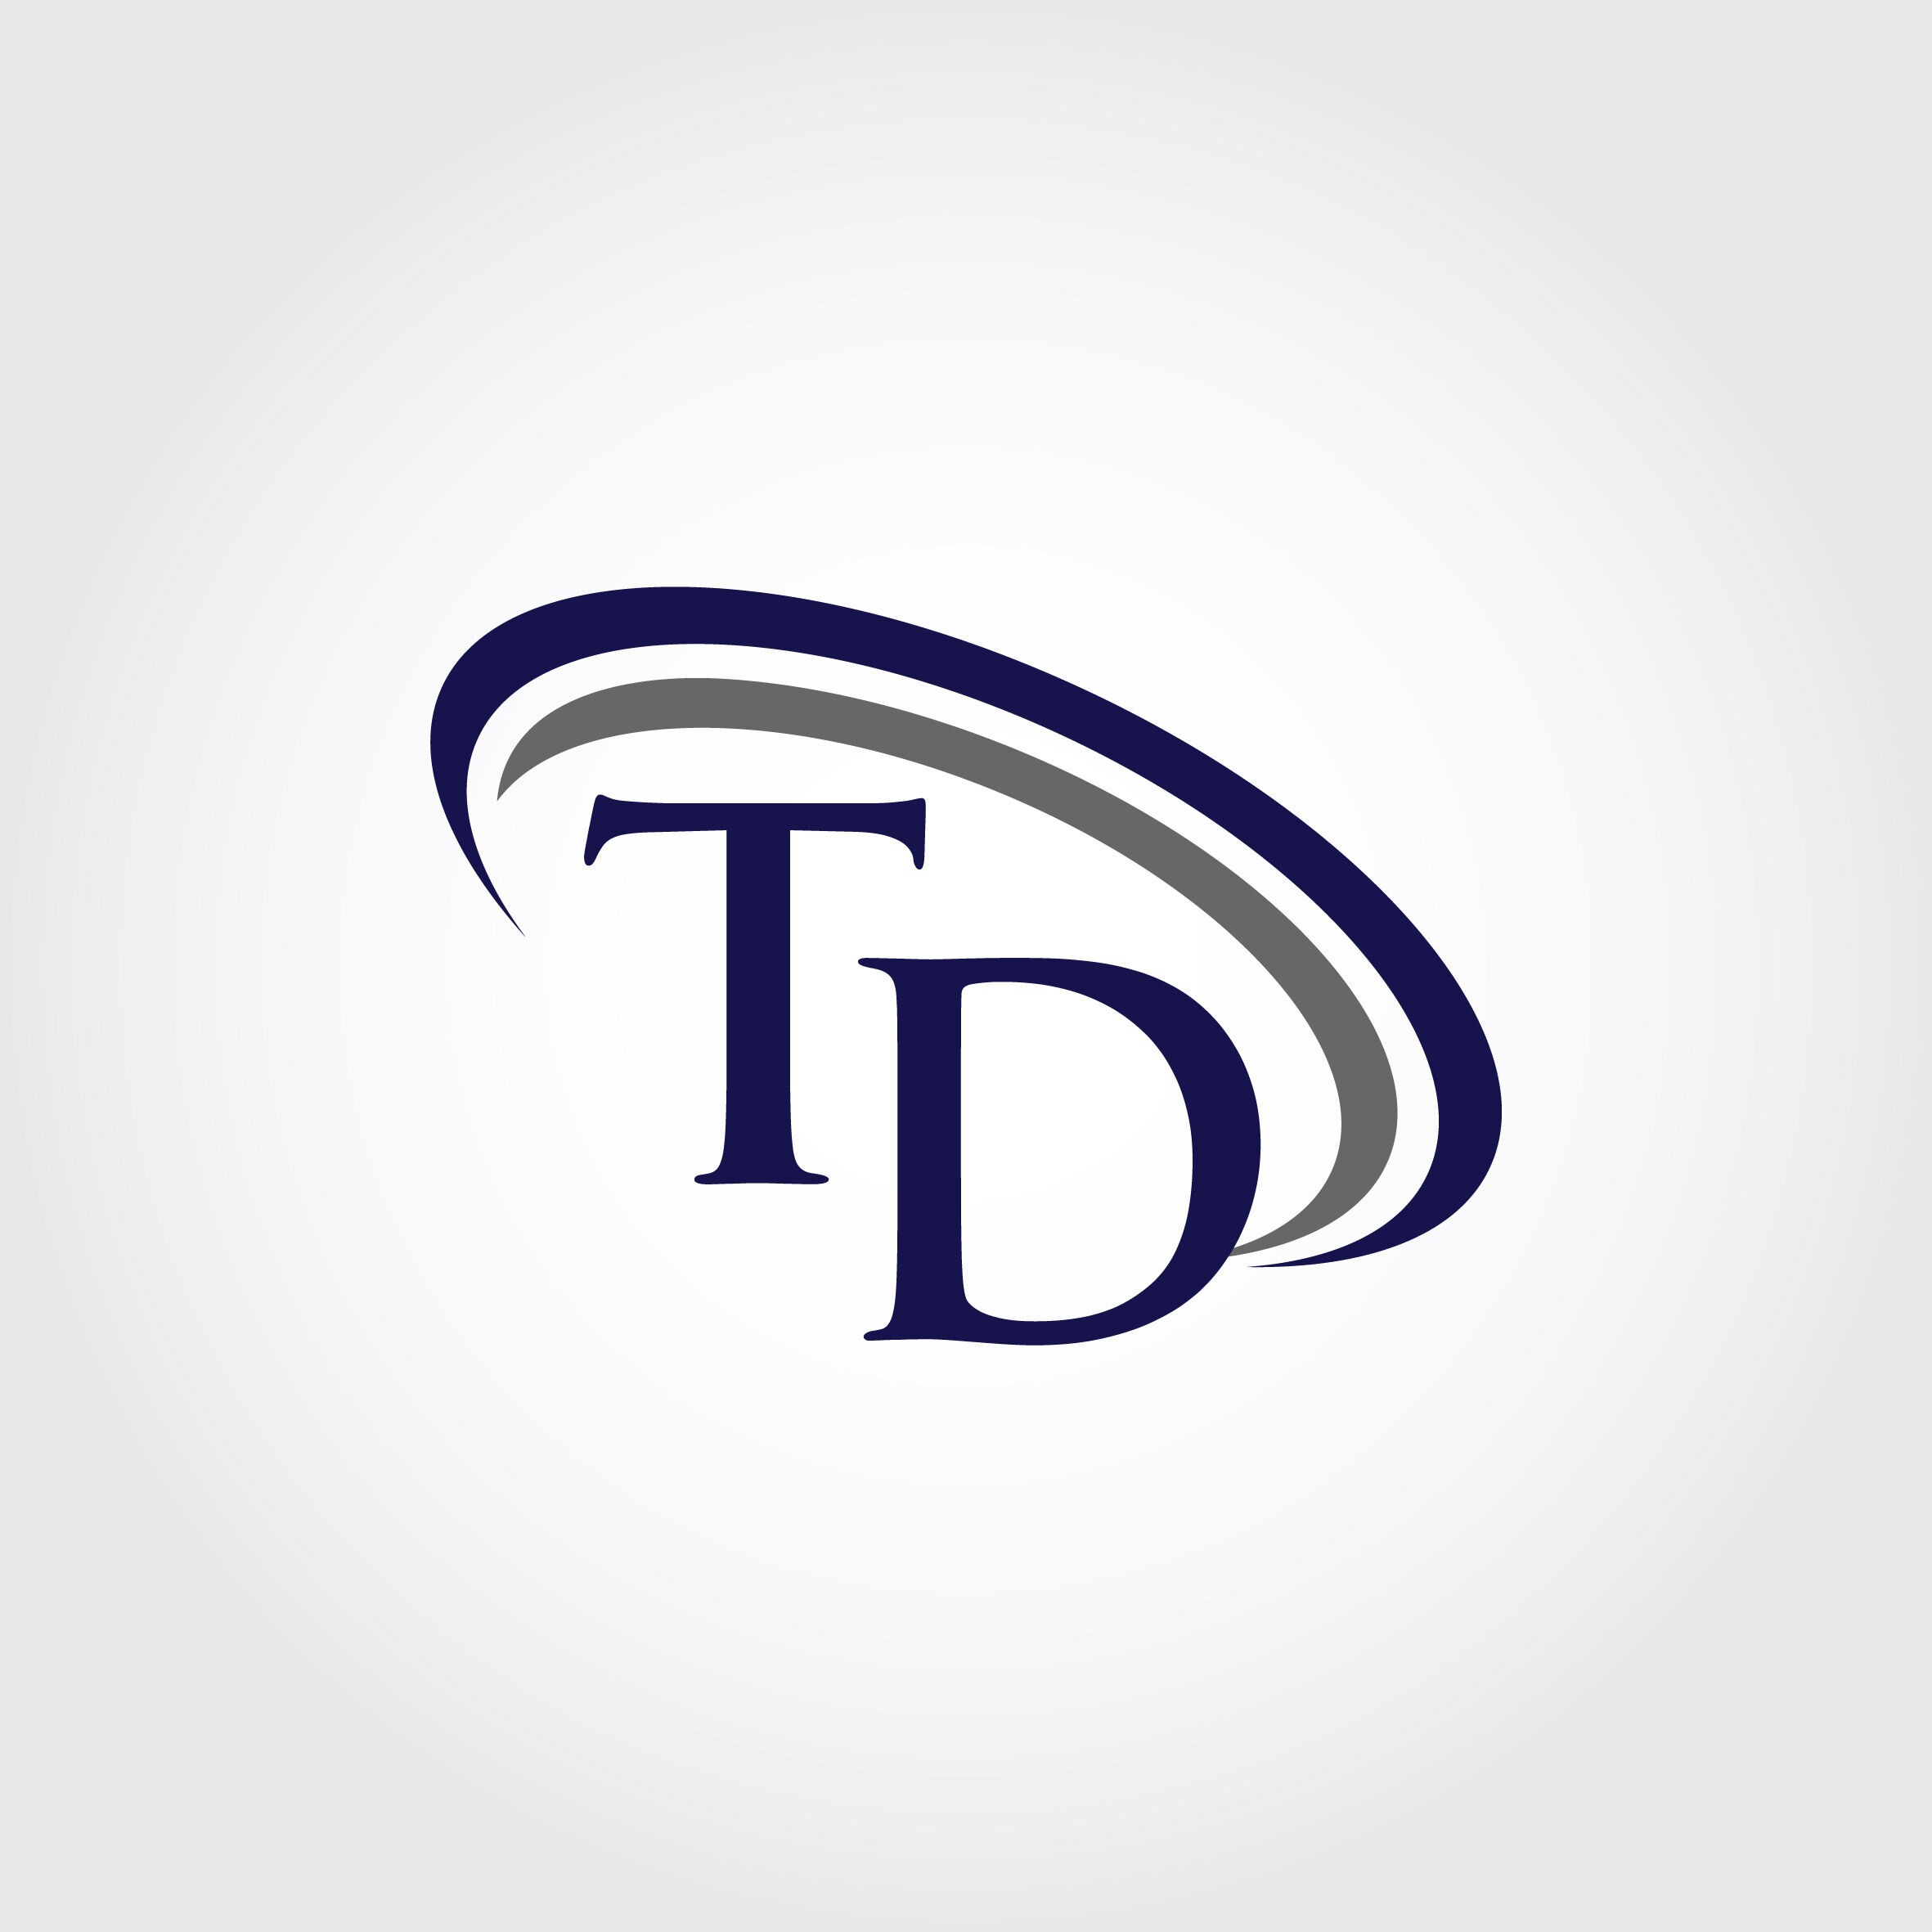 Monogram TD Logo Design By Vectorseller TheHungryJPEG com. thehungryjpeg.co...